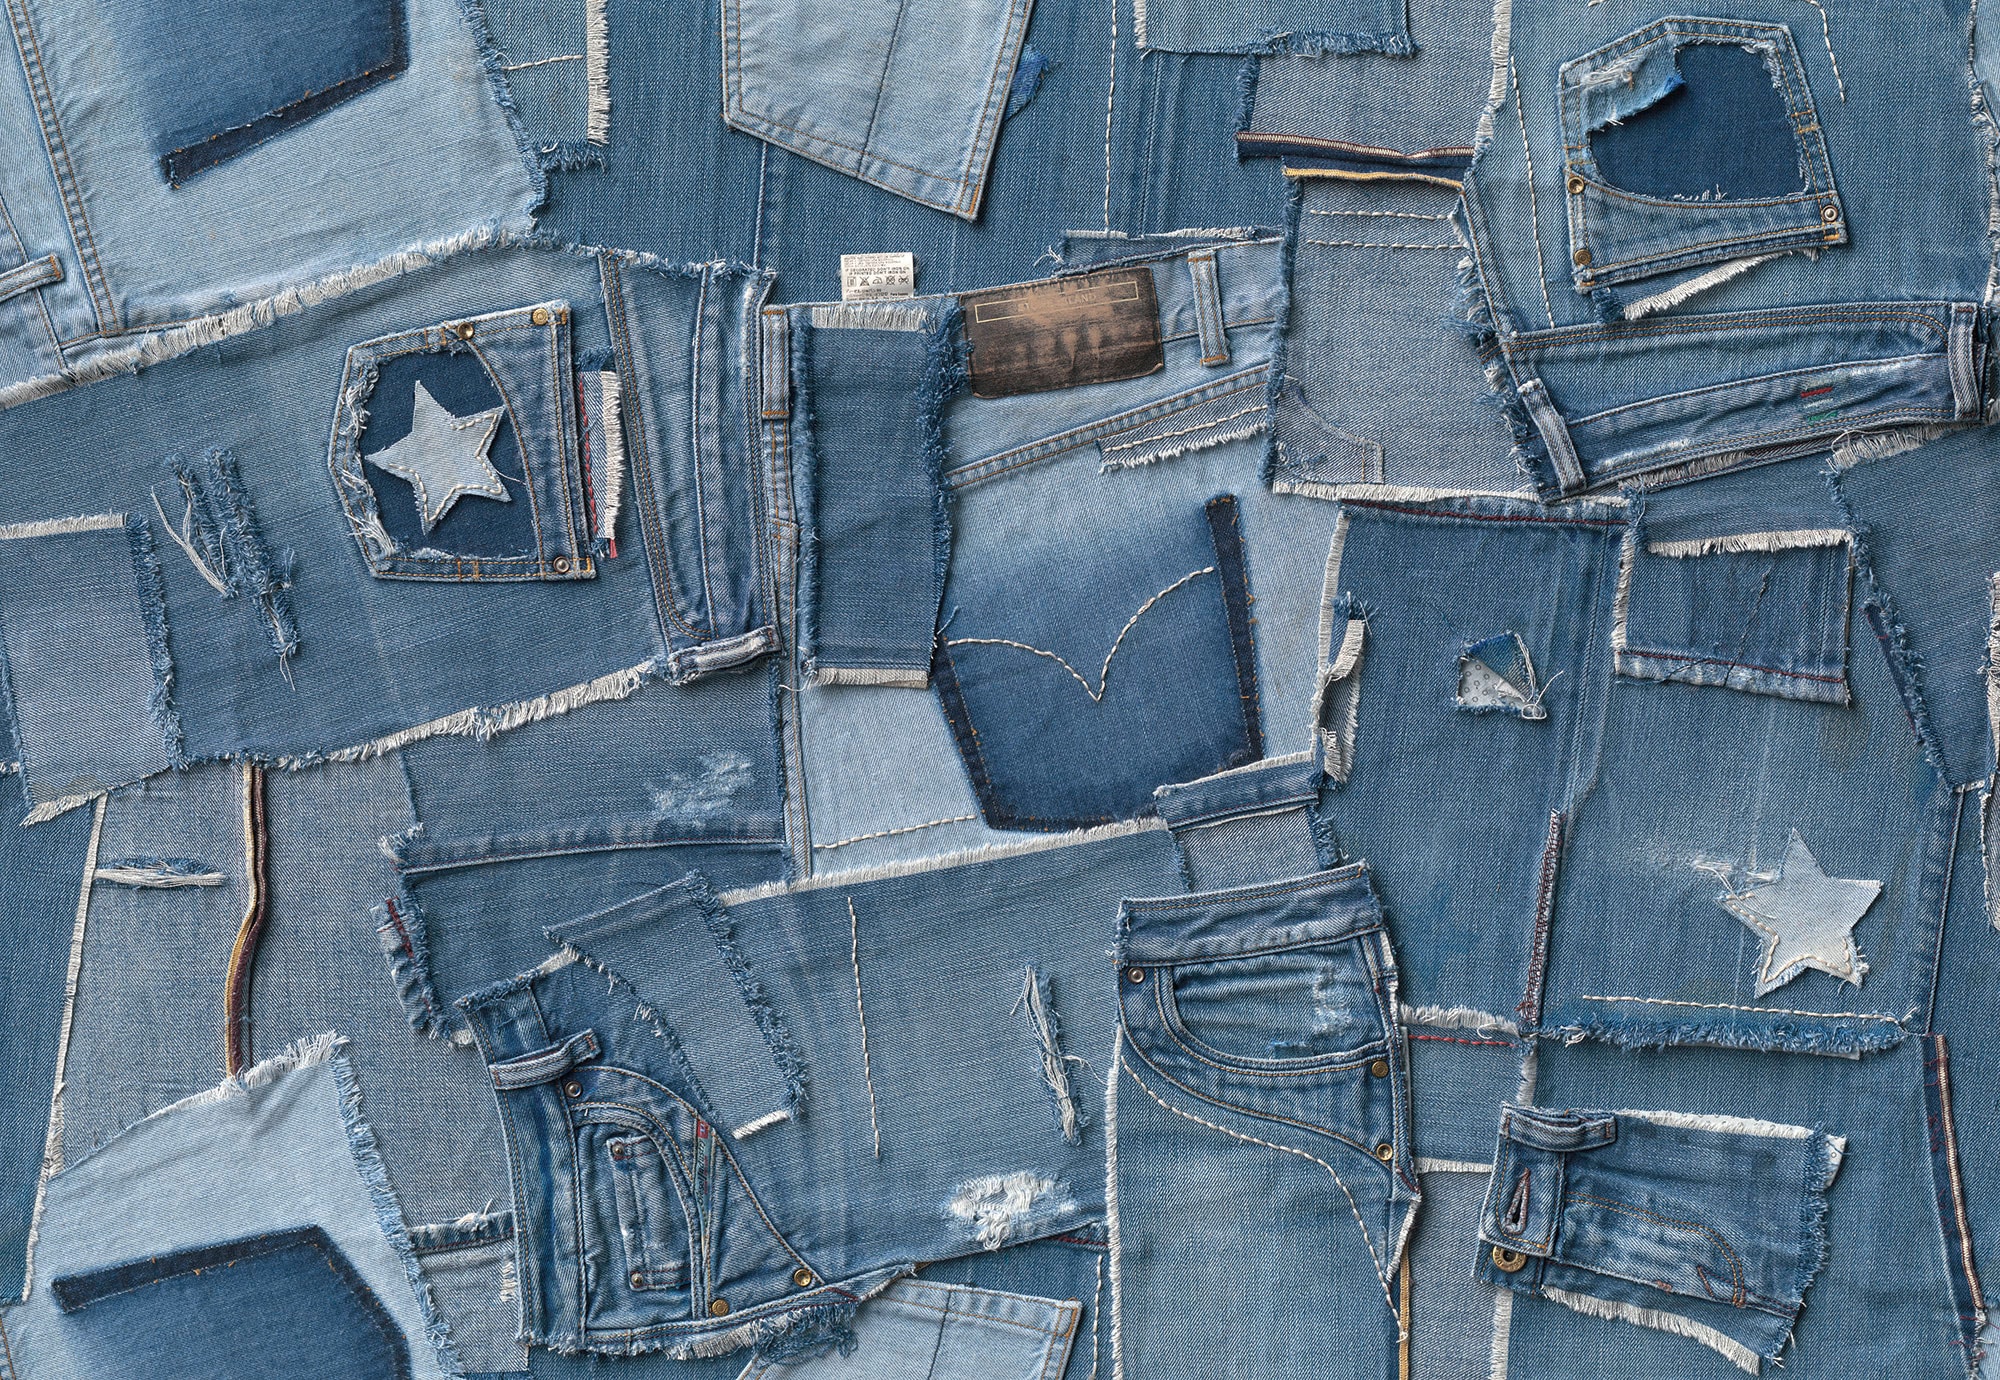 Fototapete »Jeans«, 368x254 cm (Breite x Höhe)